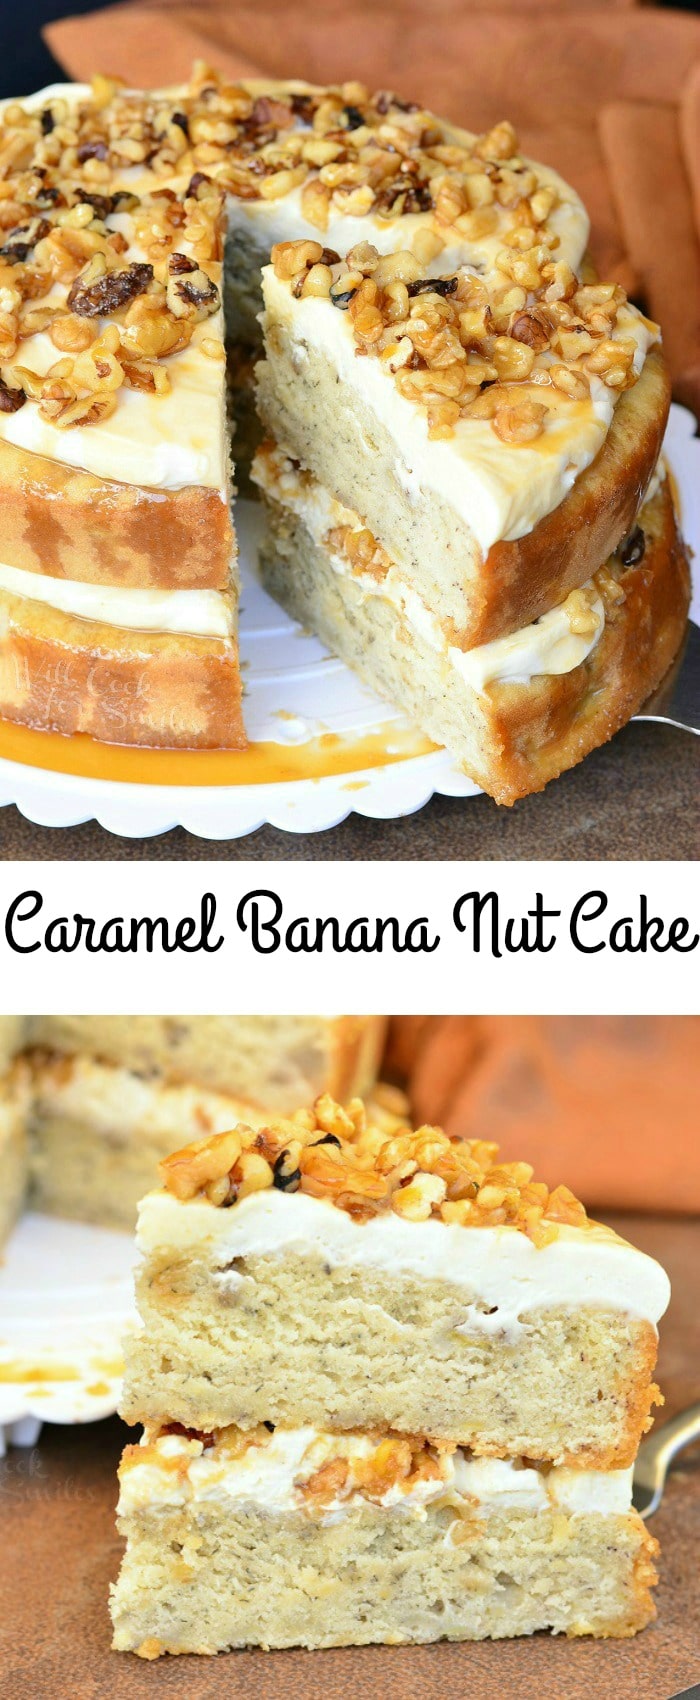 Nut Dessert Recipes: Caramel Banana Nut Cake